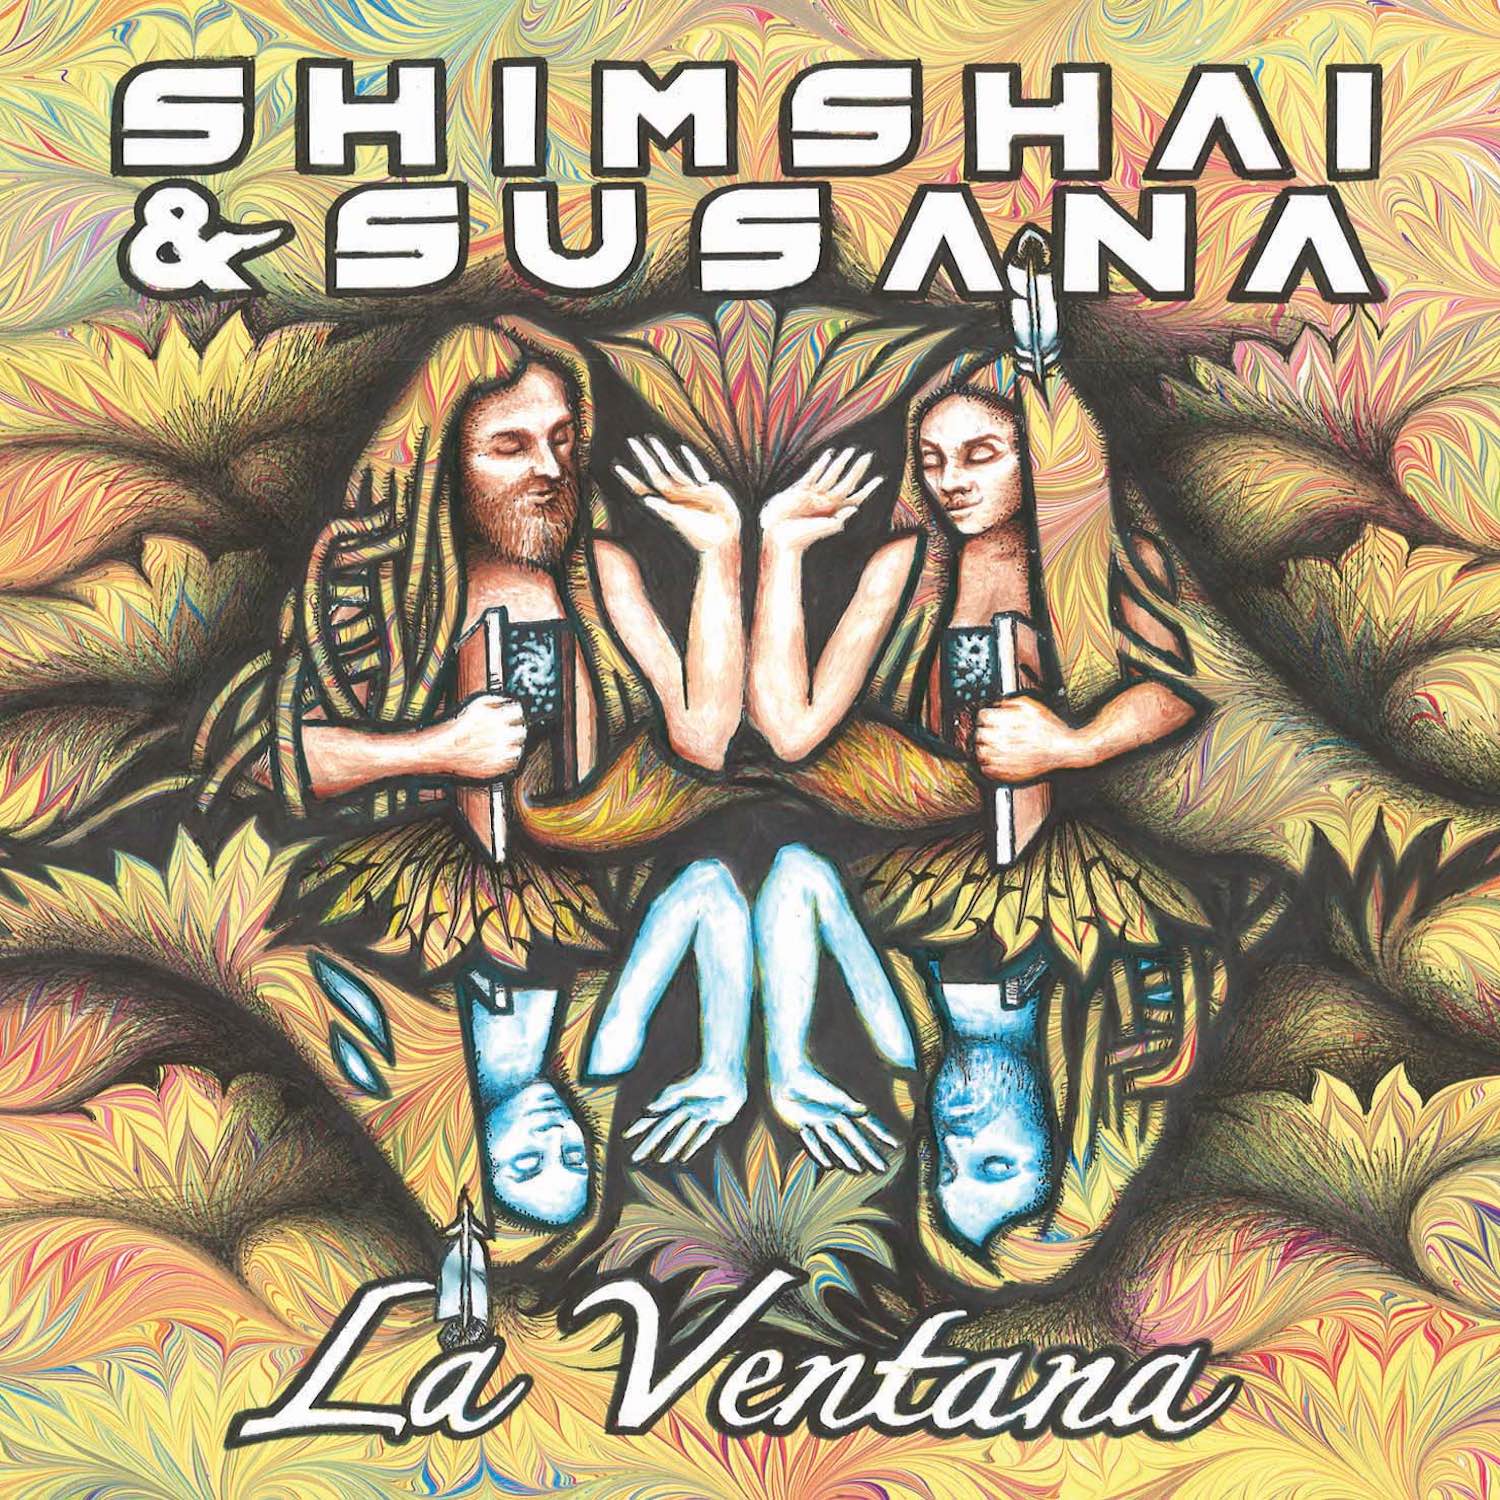 La Ventana by Los Kjarkas from the album La Ventana by Shimshai & Susana